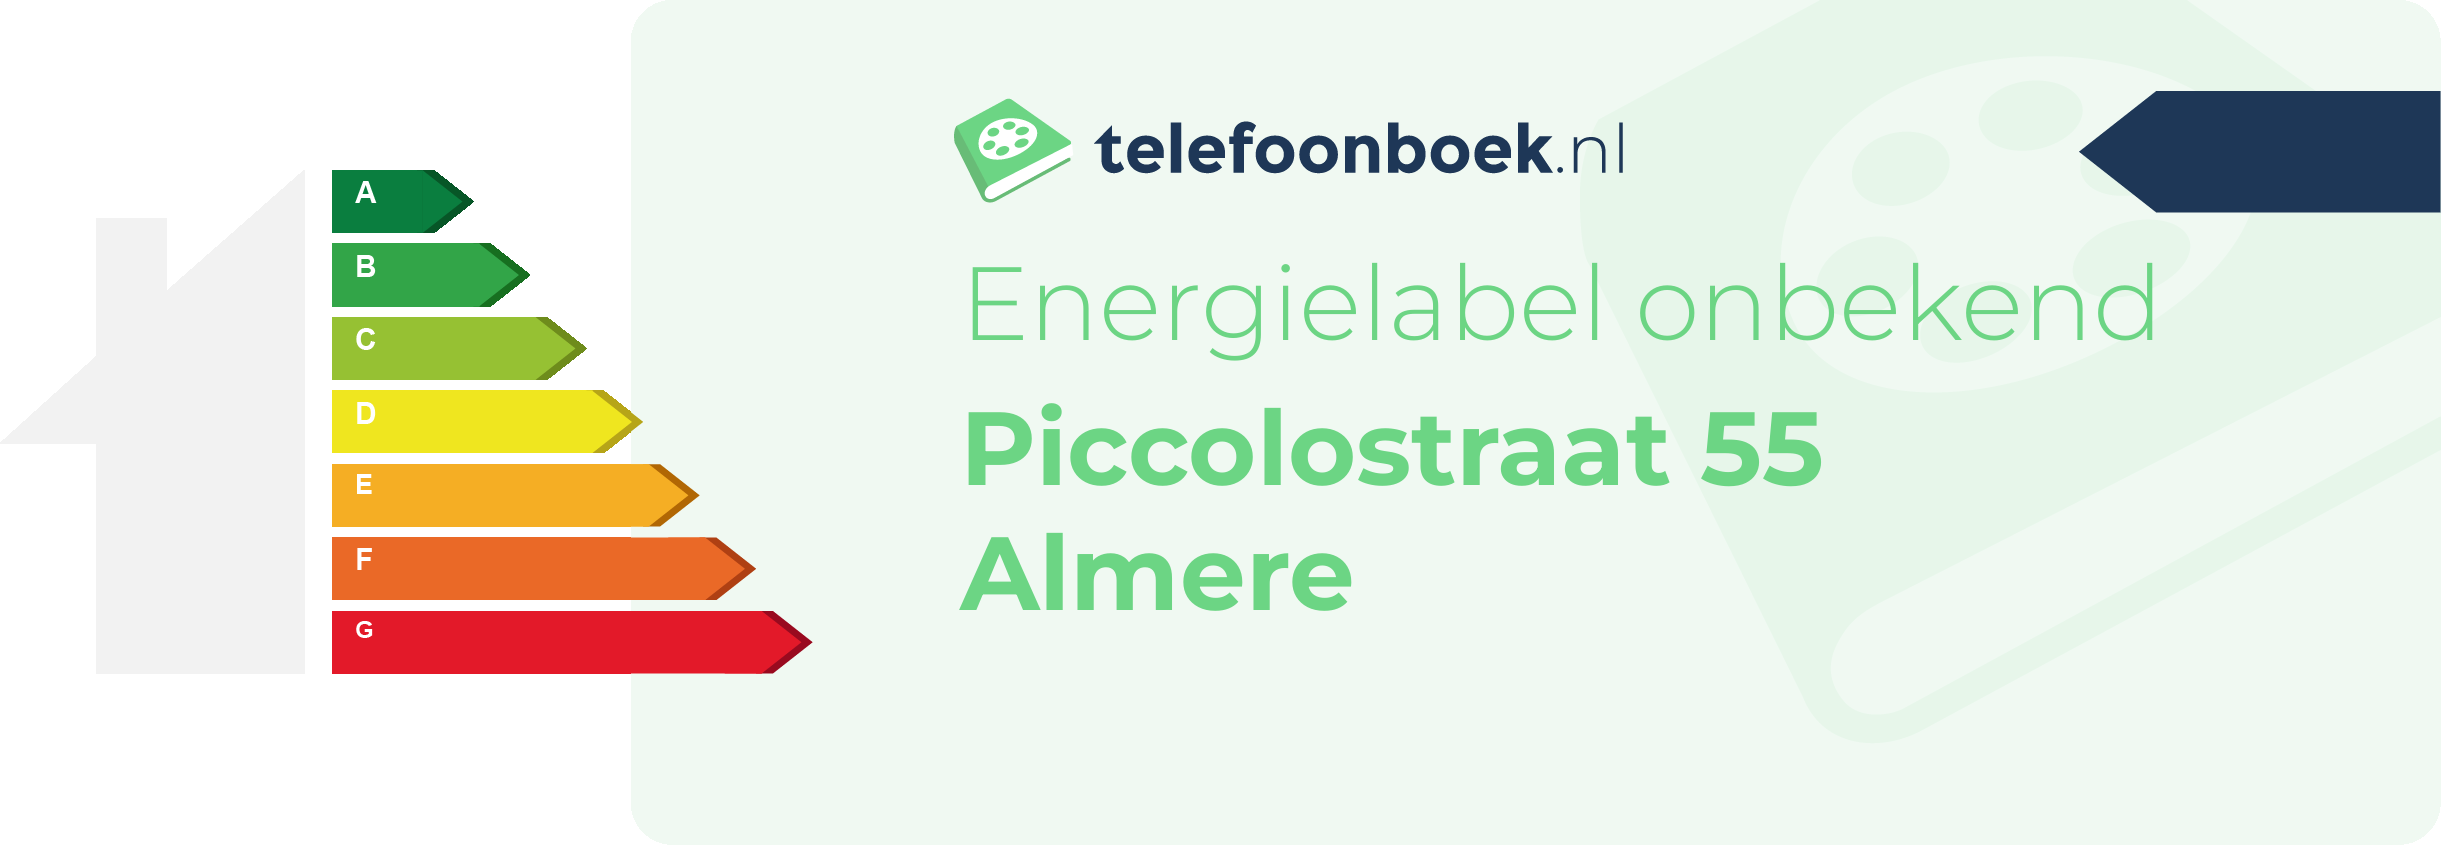 Energielabel Piccolostraat 55 Almere